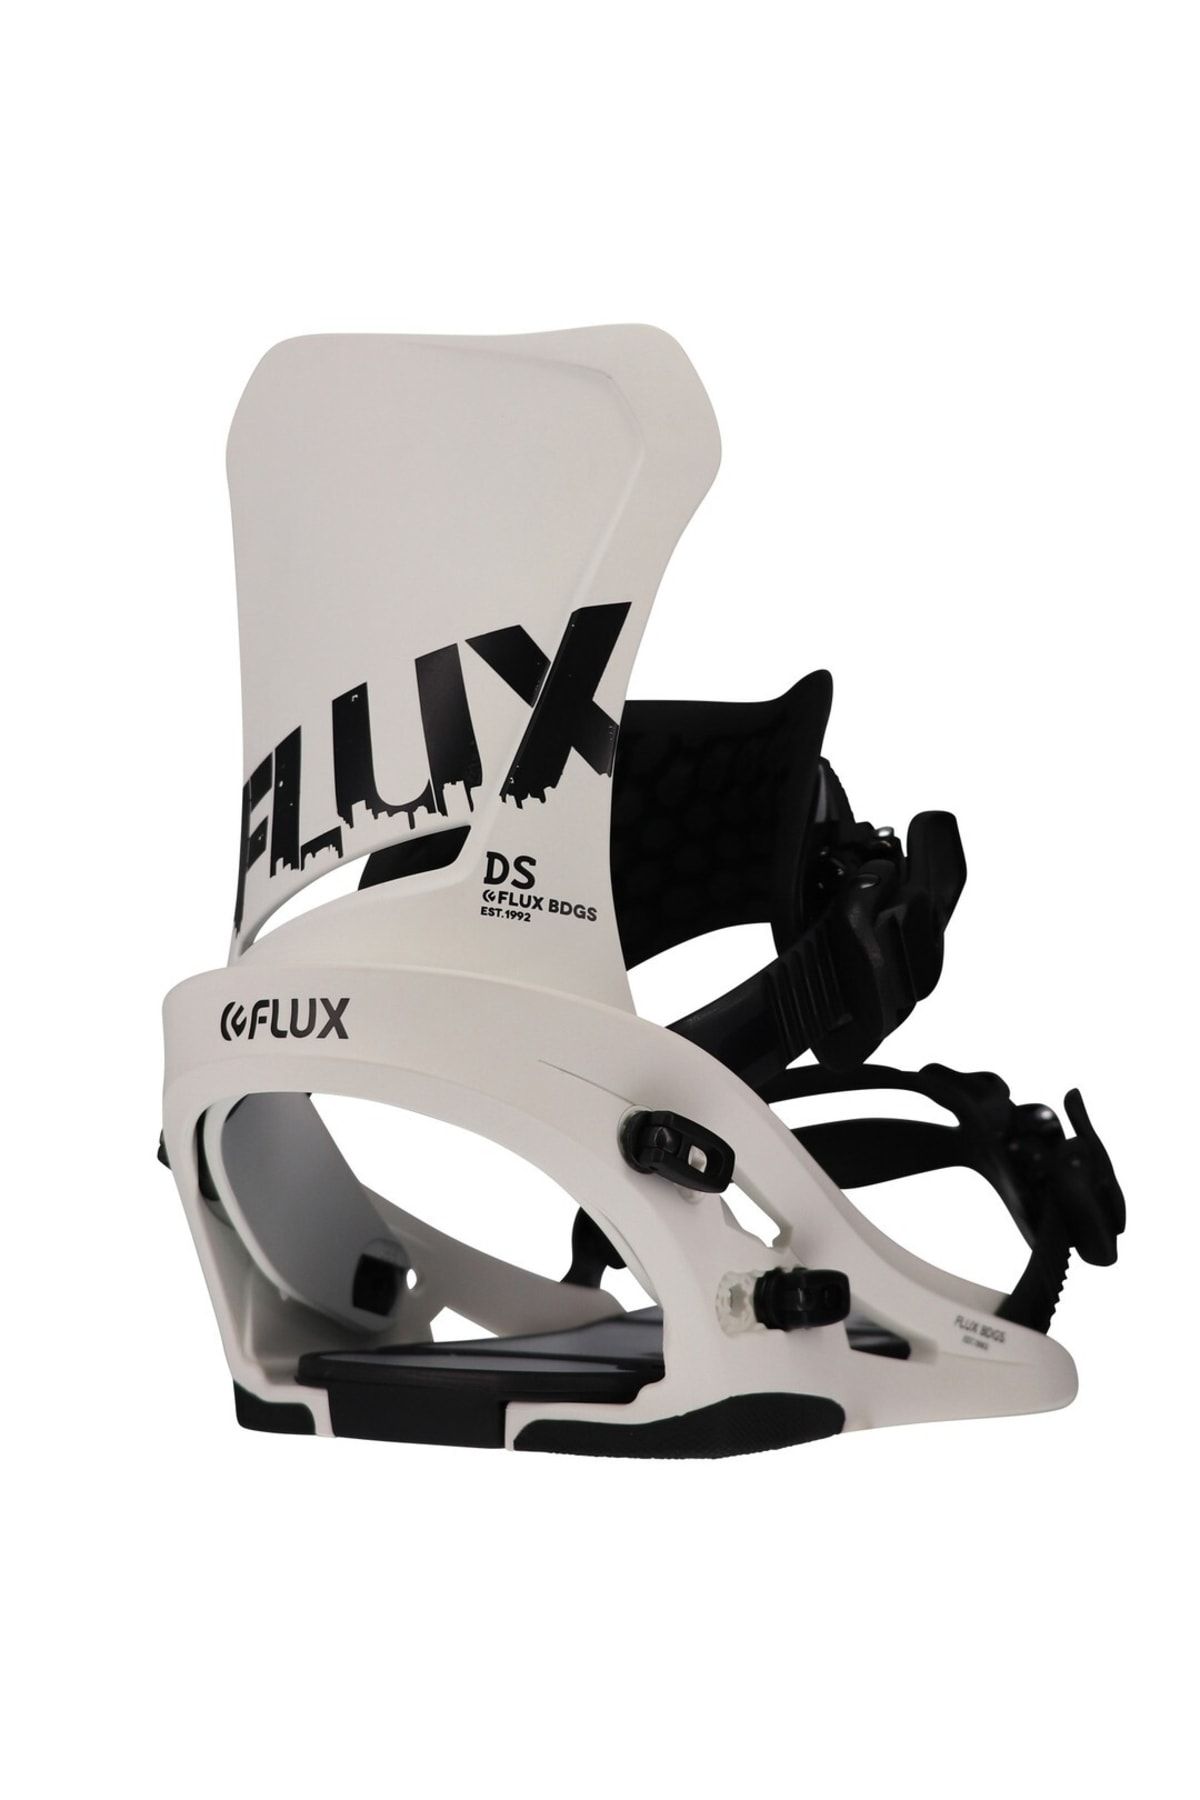 Flux Ds White Snowboard Bağlama